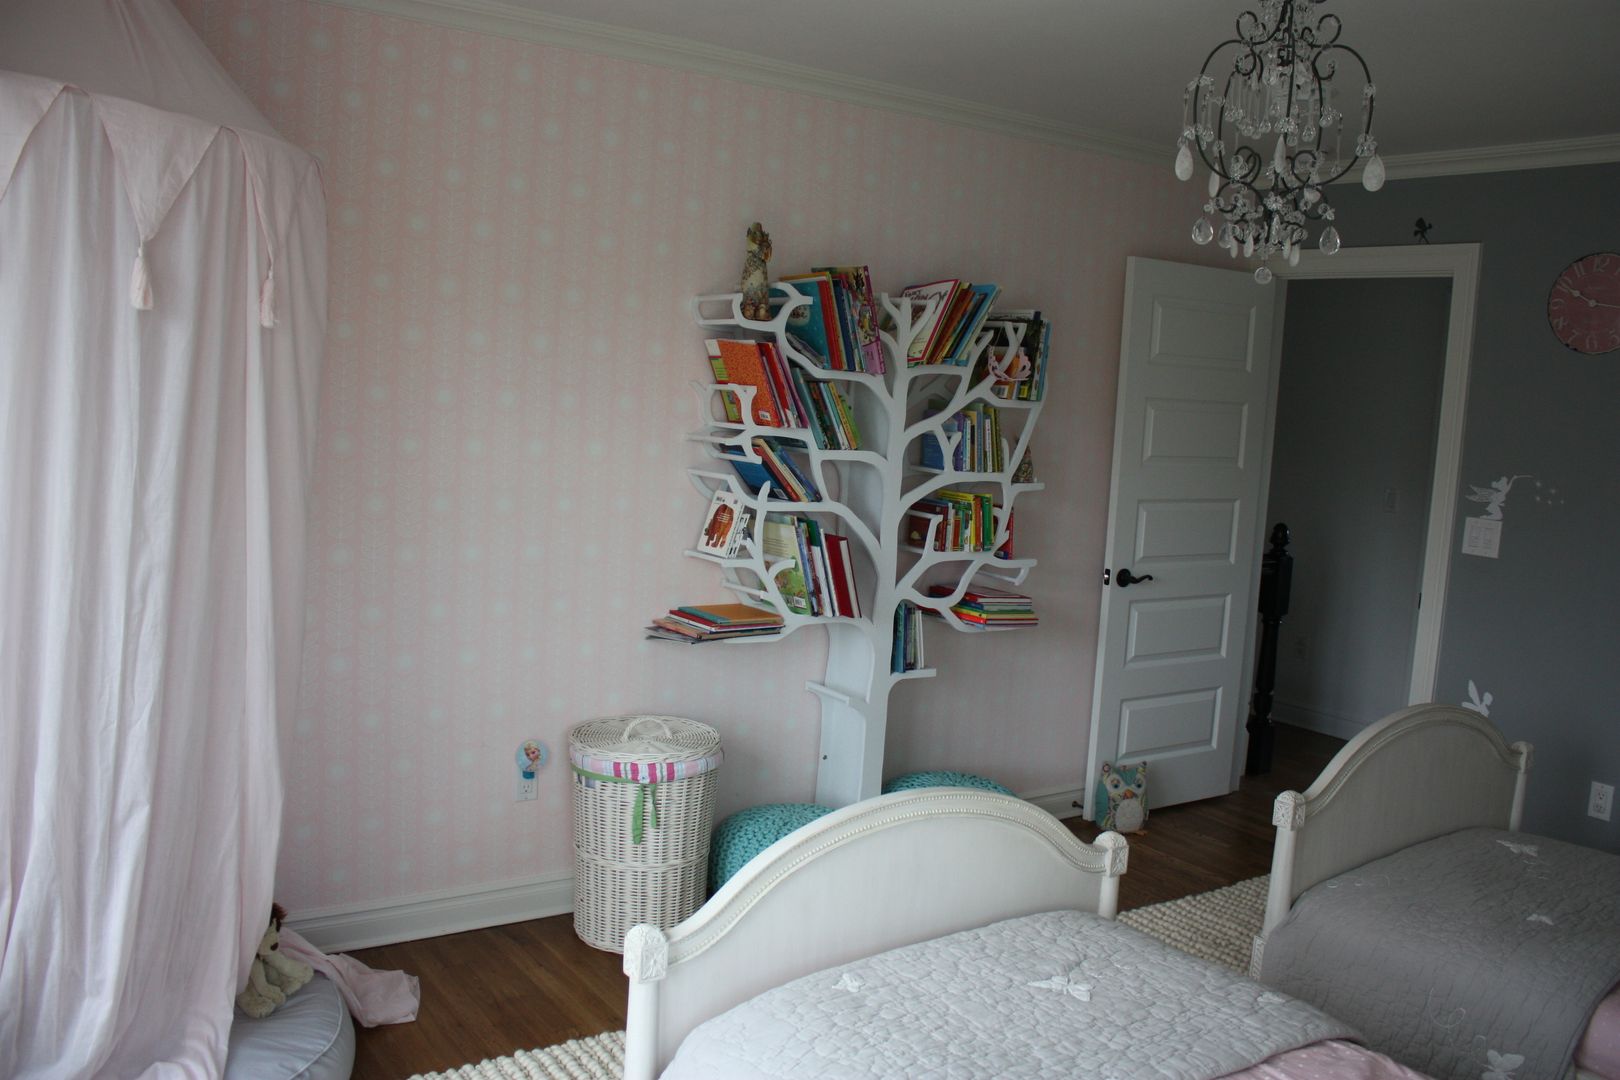 Girls' Bedroom 'Before' Photo homify غرفة الاطفال